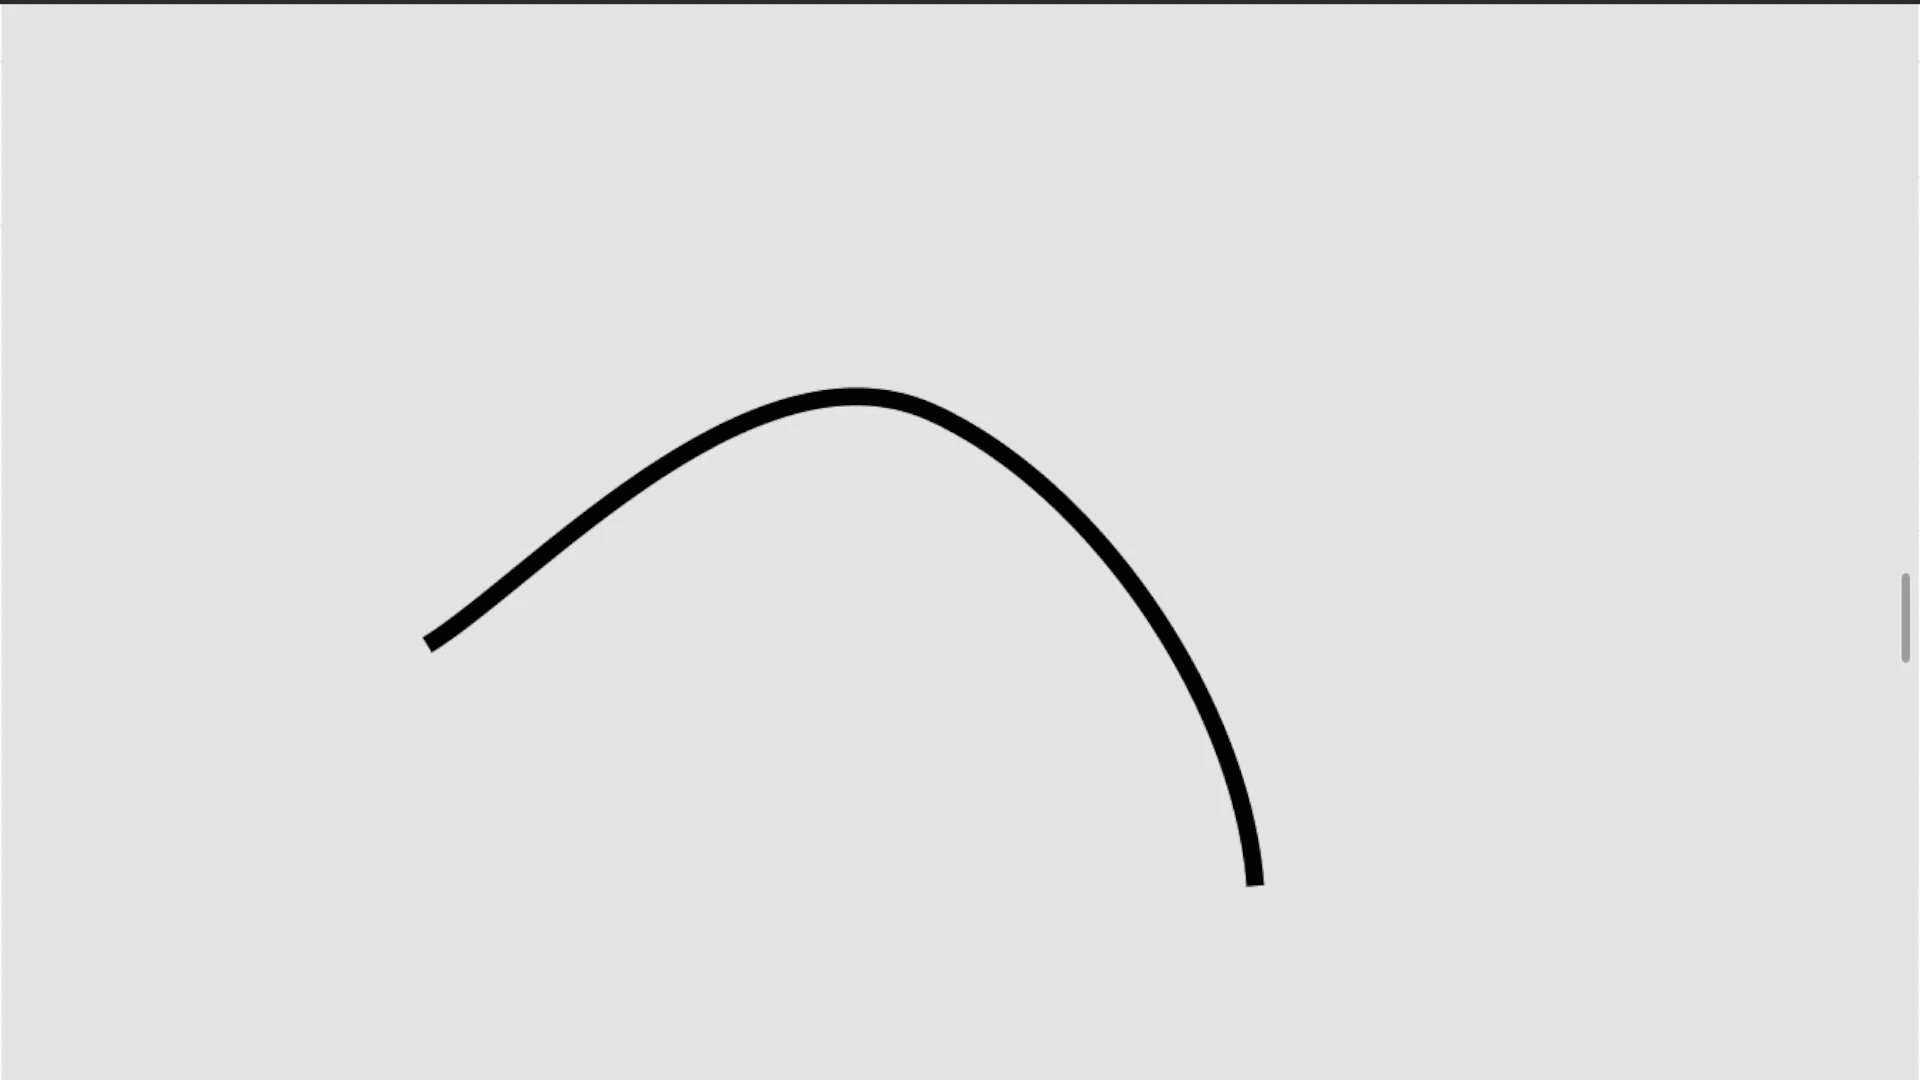 Bézier curve in Figma